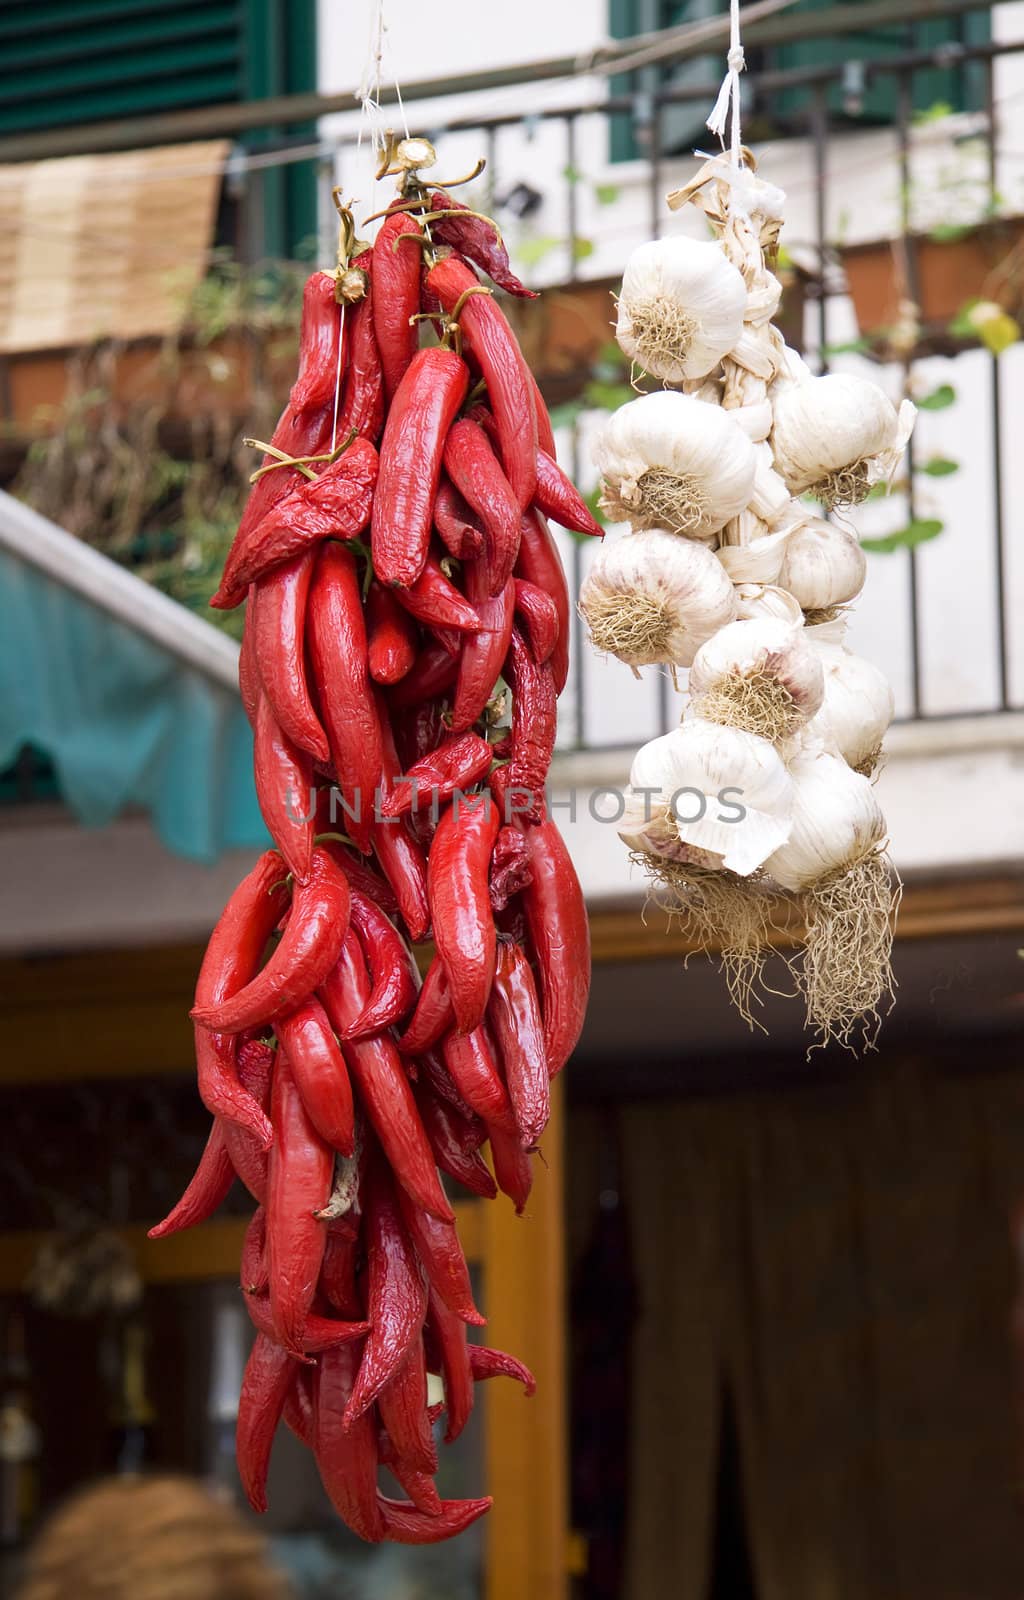 Garlic and chili on a street market